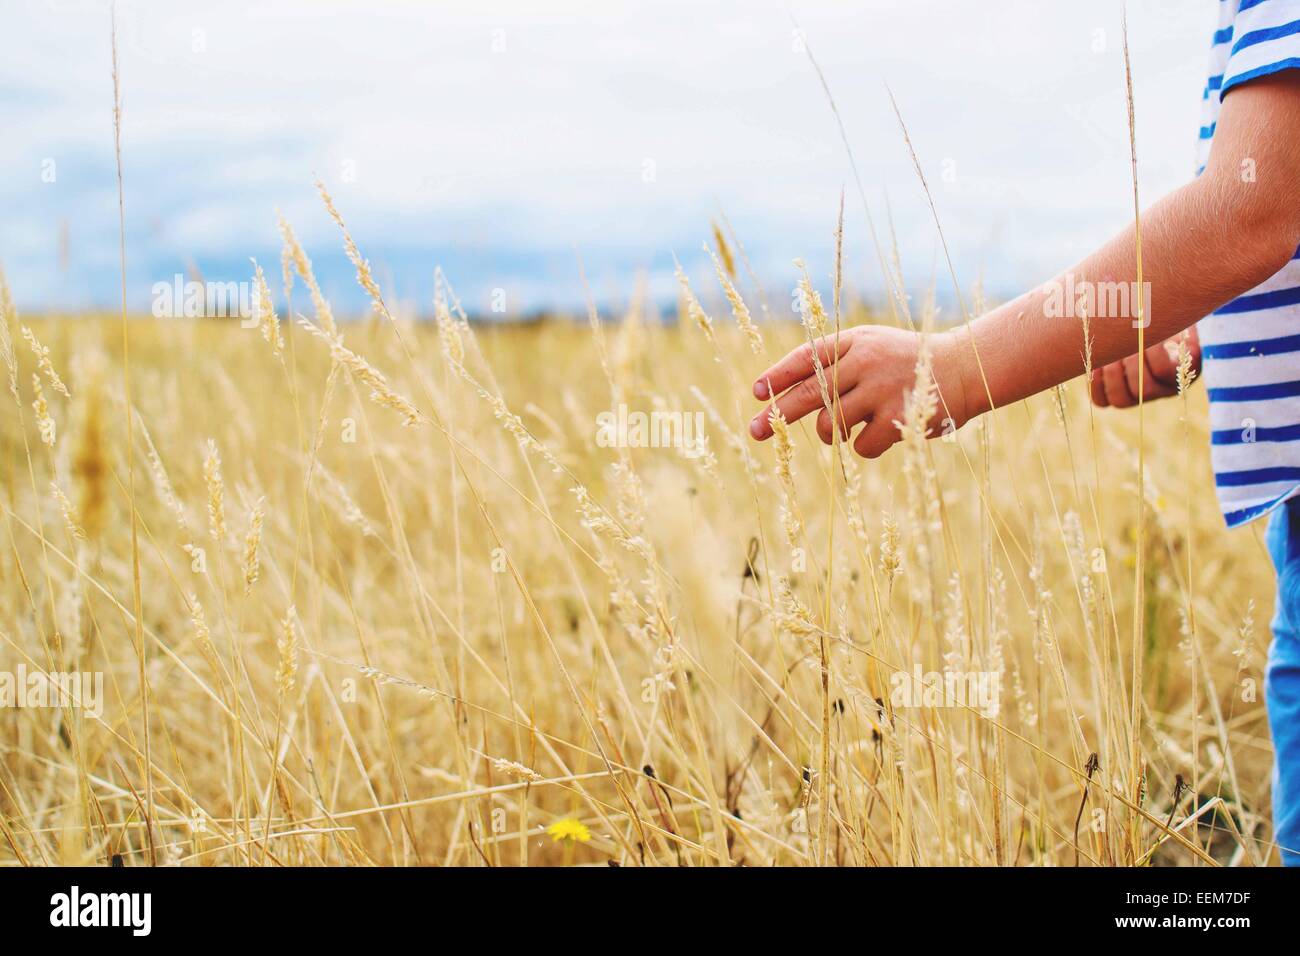 Boy standing in a field touching an ear of wheat Stock Photo